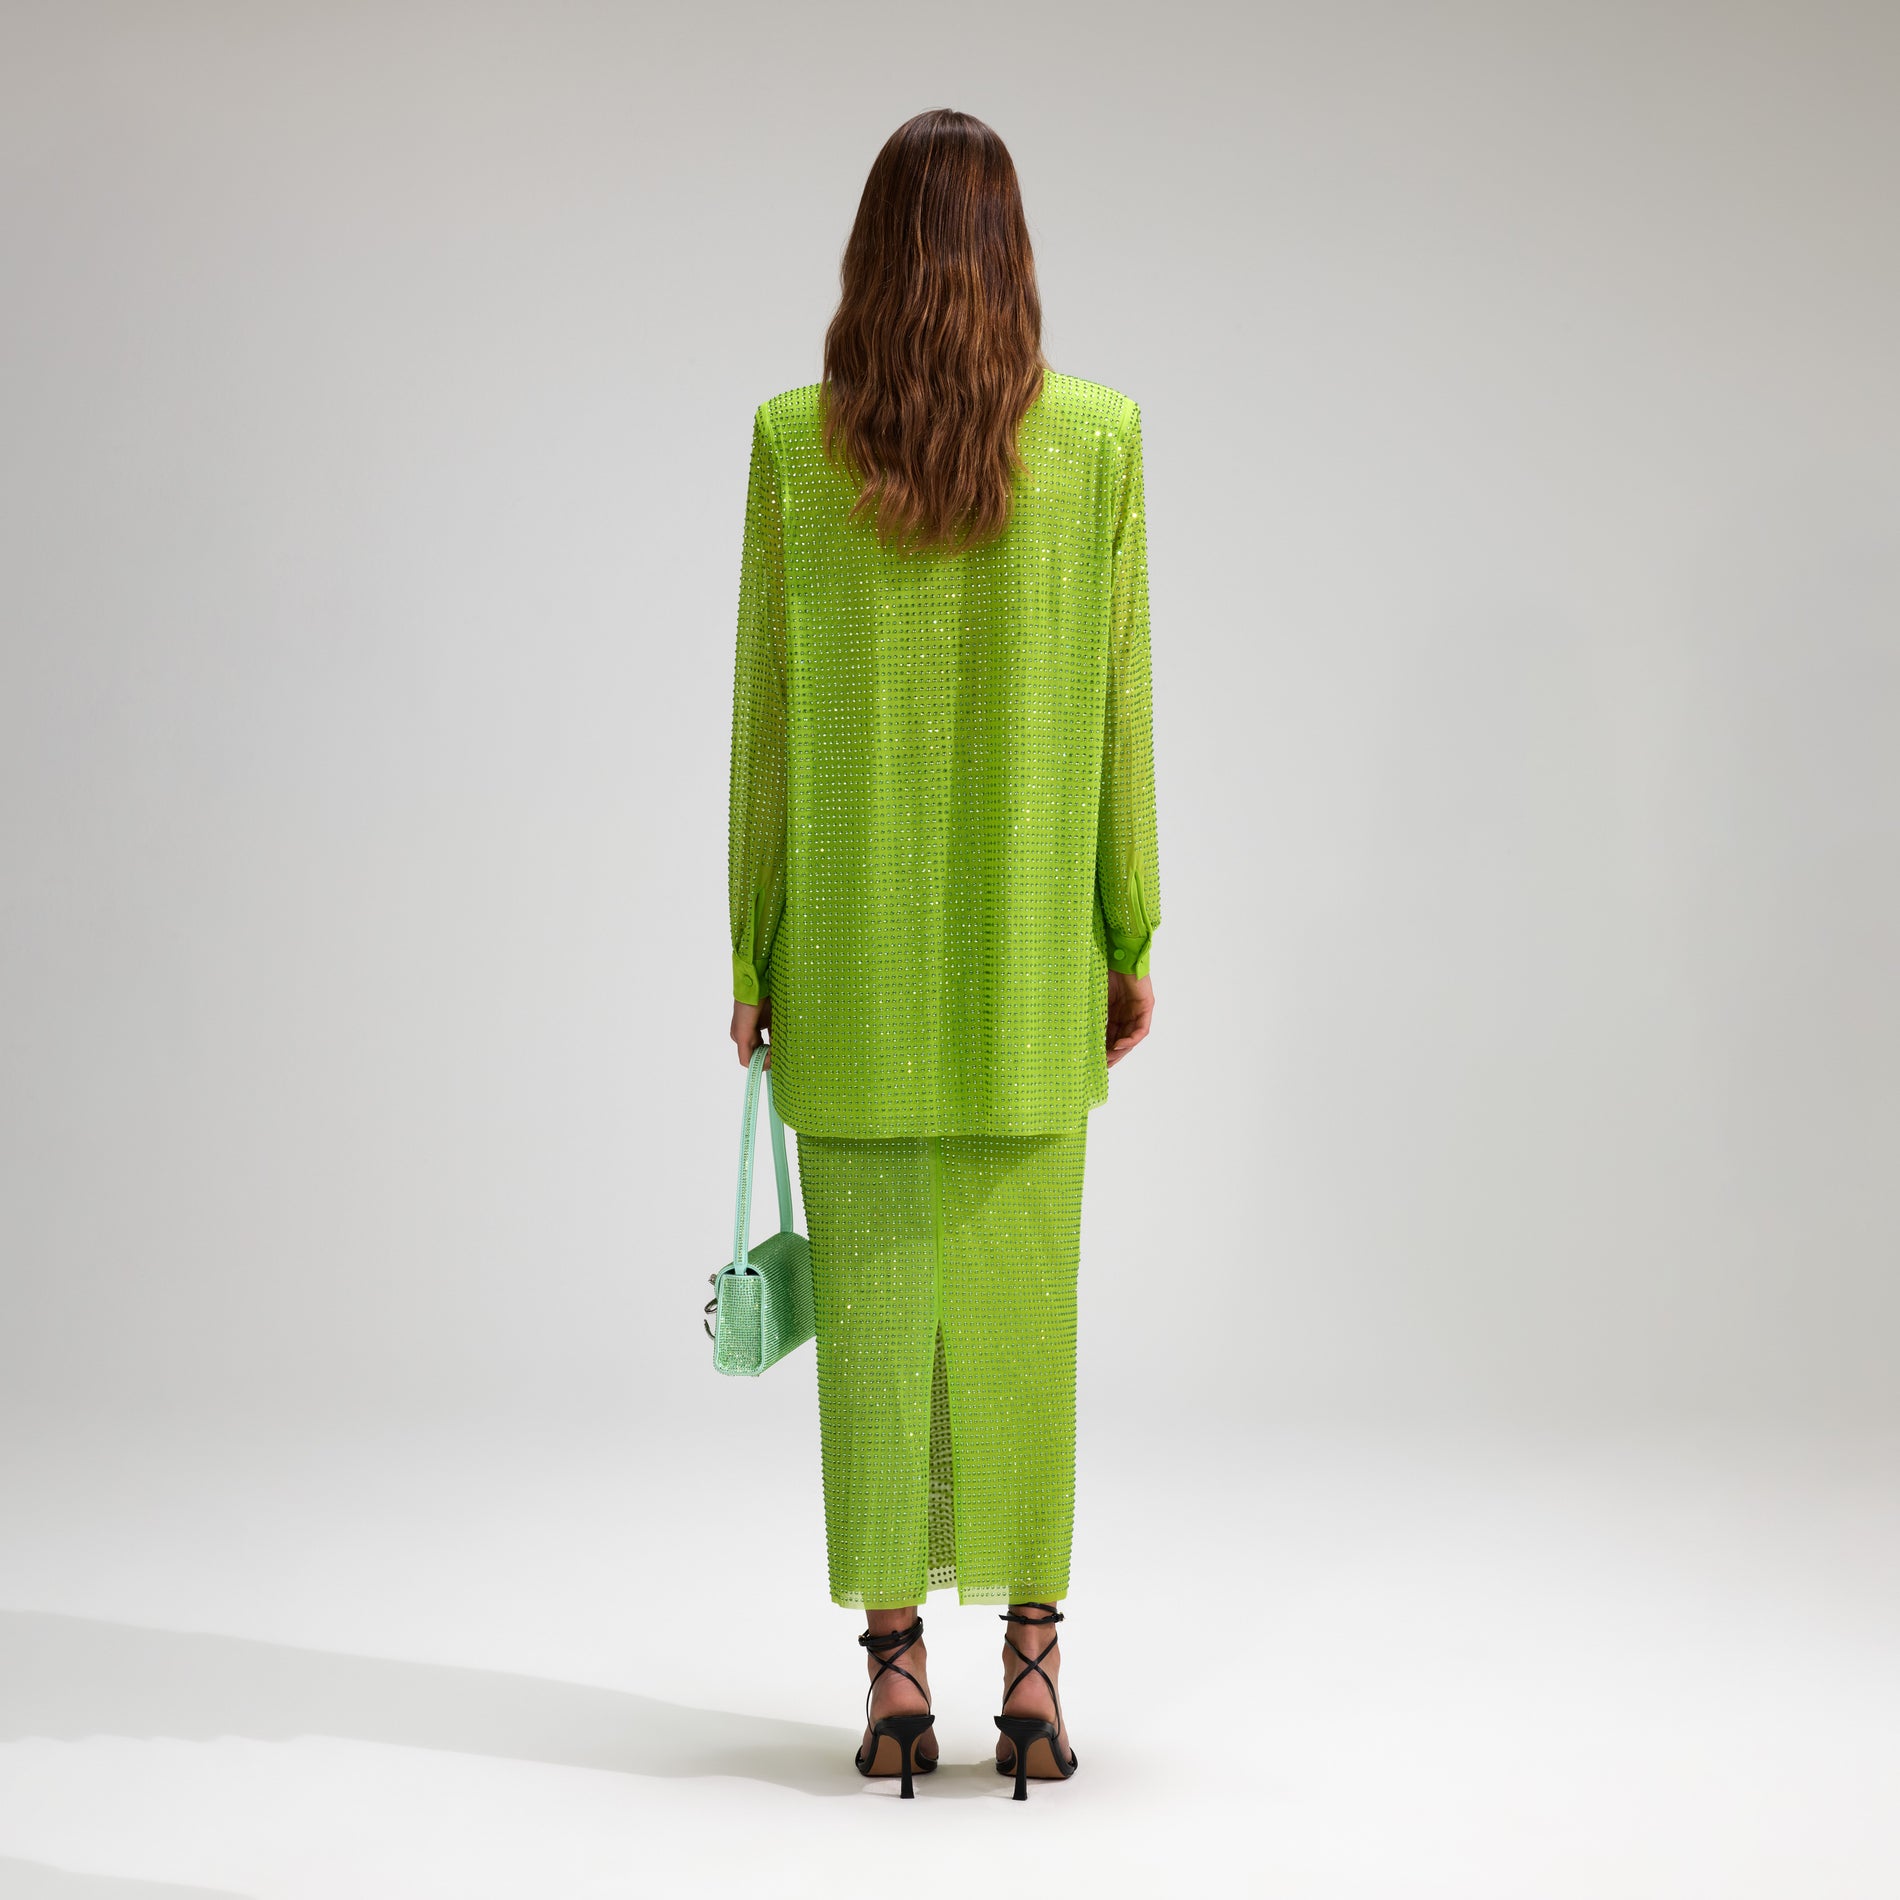 A woman wearing the Green Rhinestone Mesh Midi Skirt